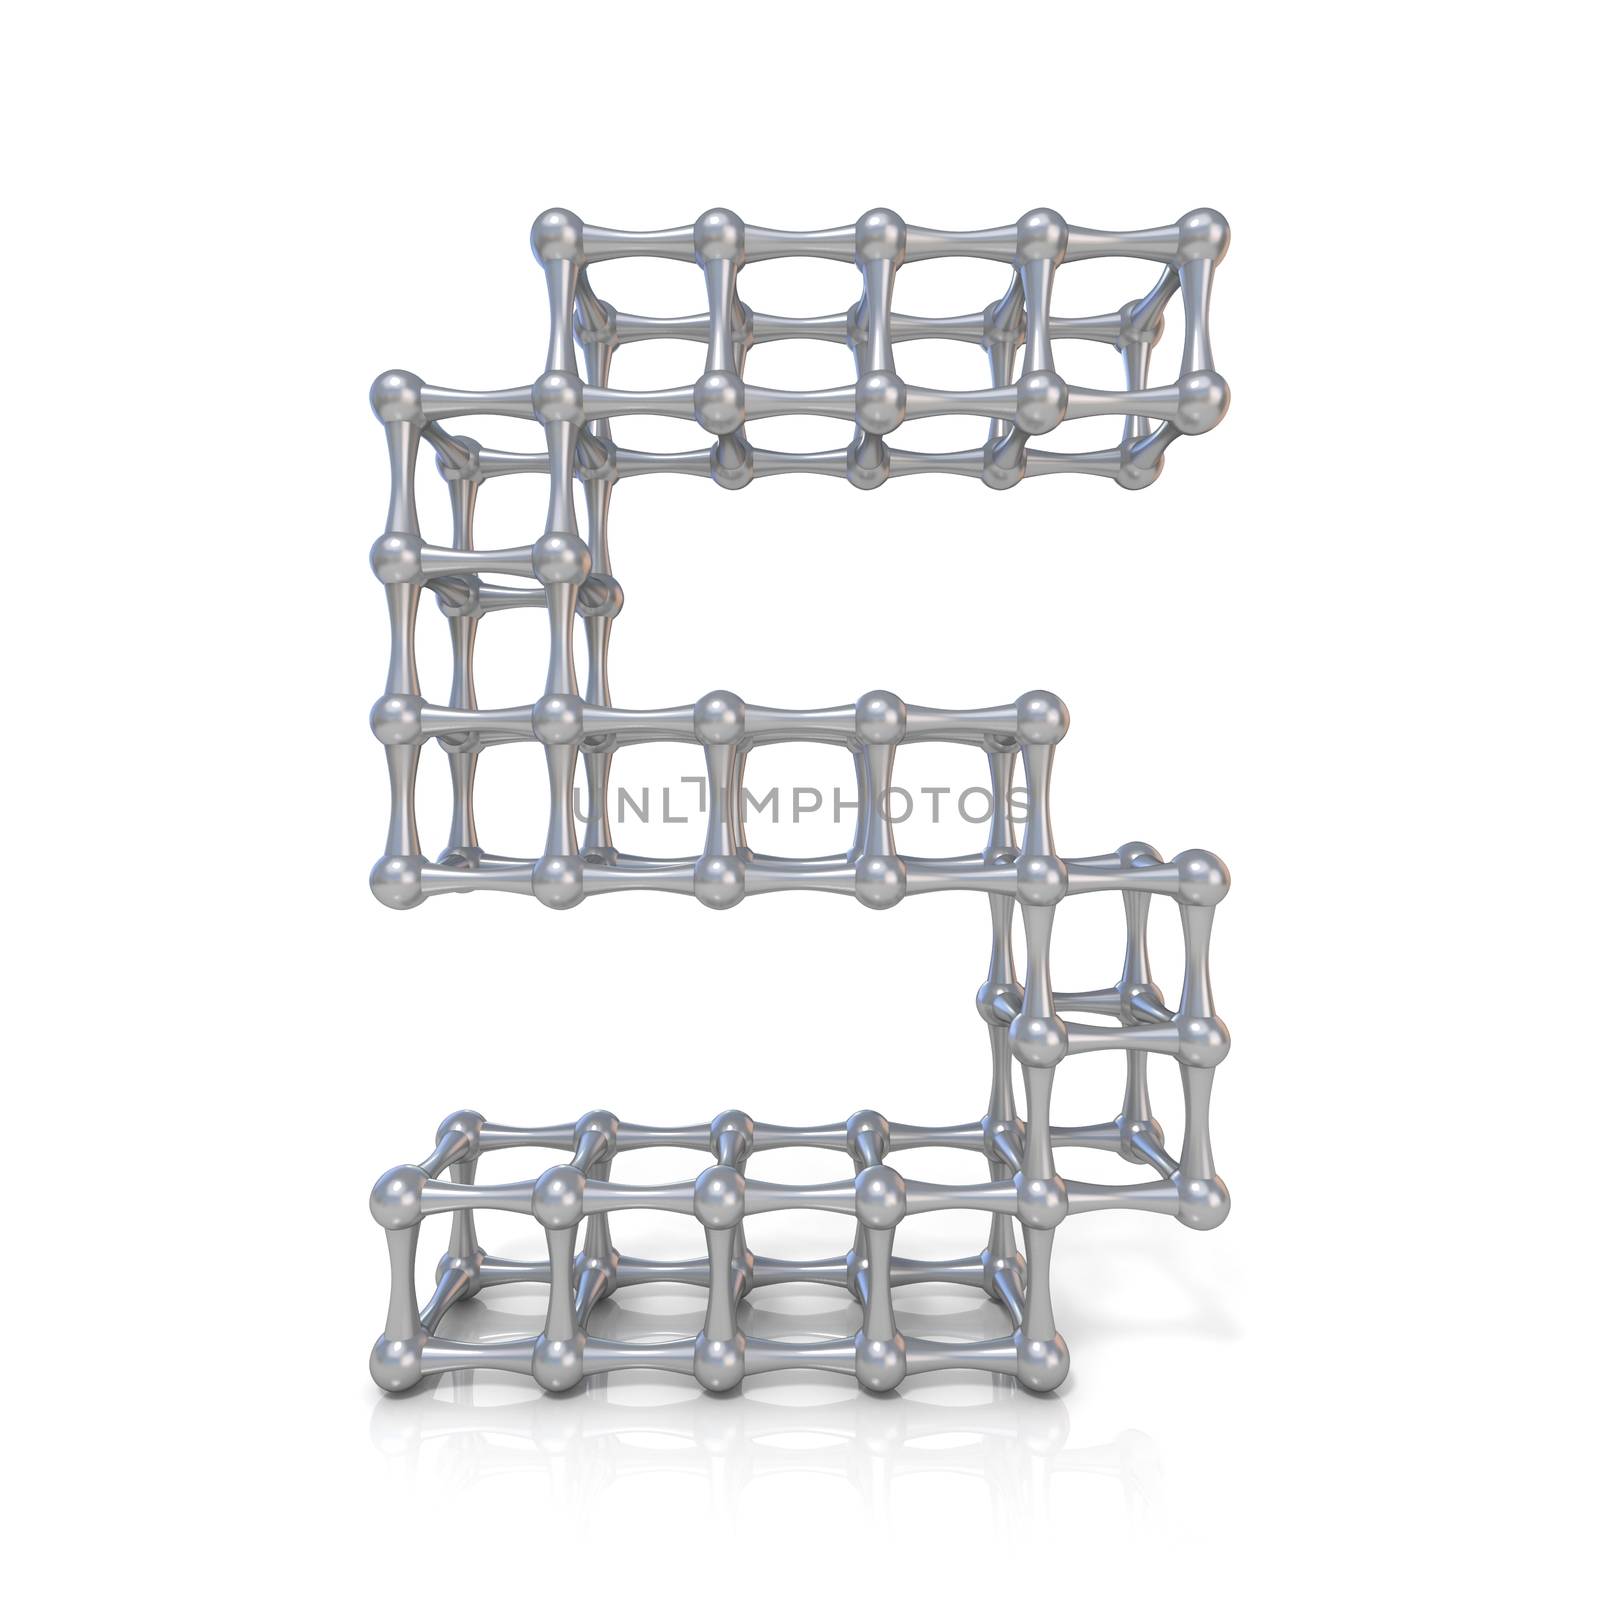 Metal lattice font letter S 3D render illustration isolated on white background